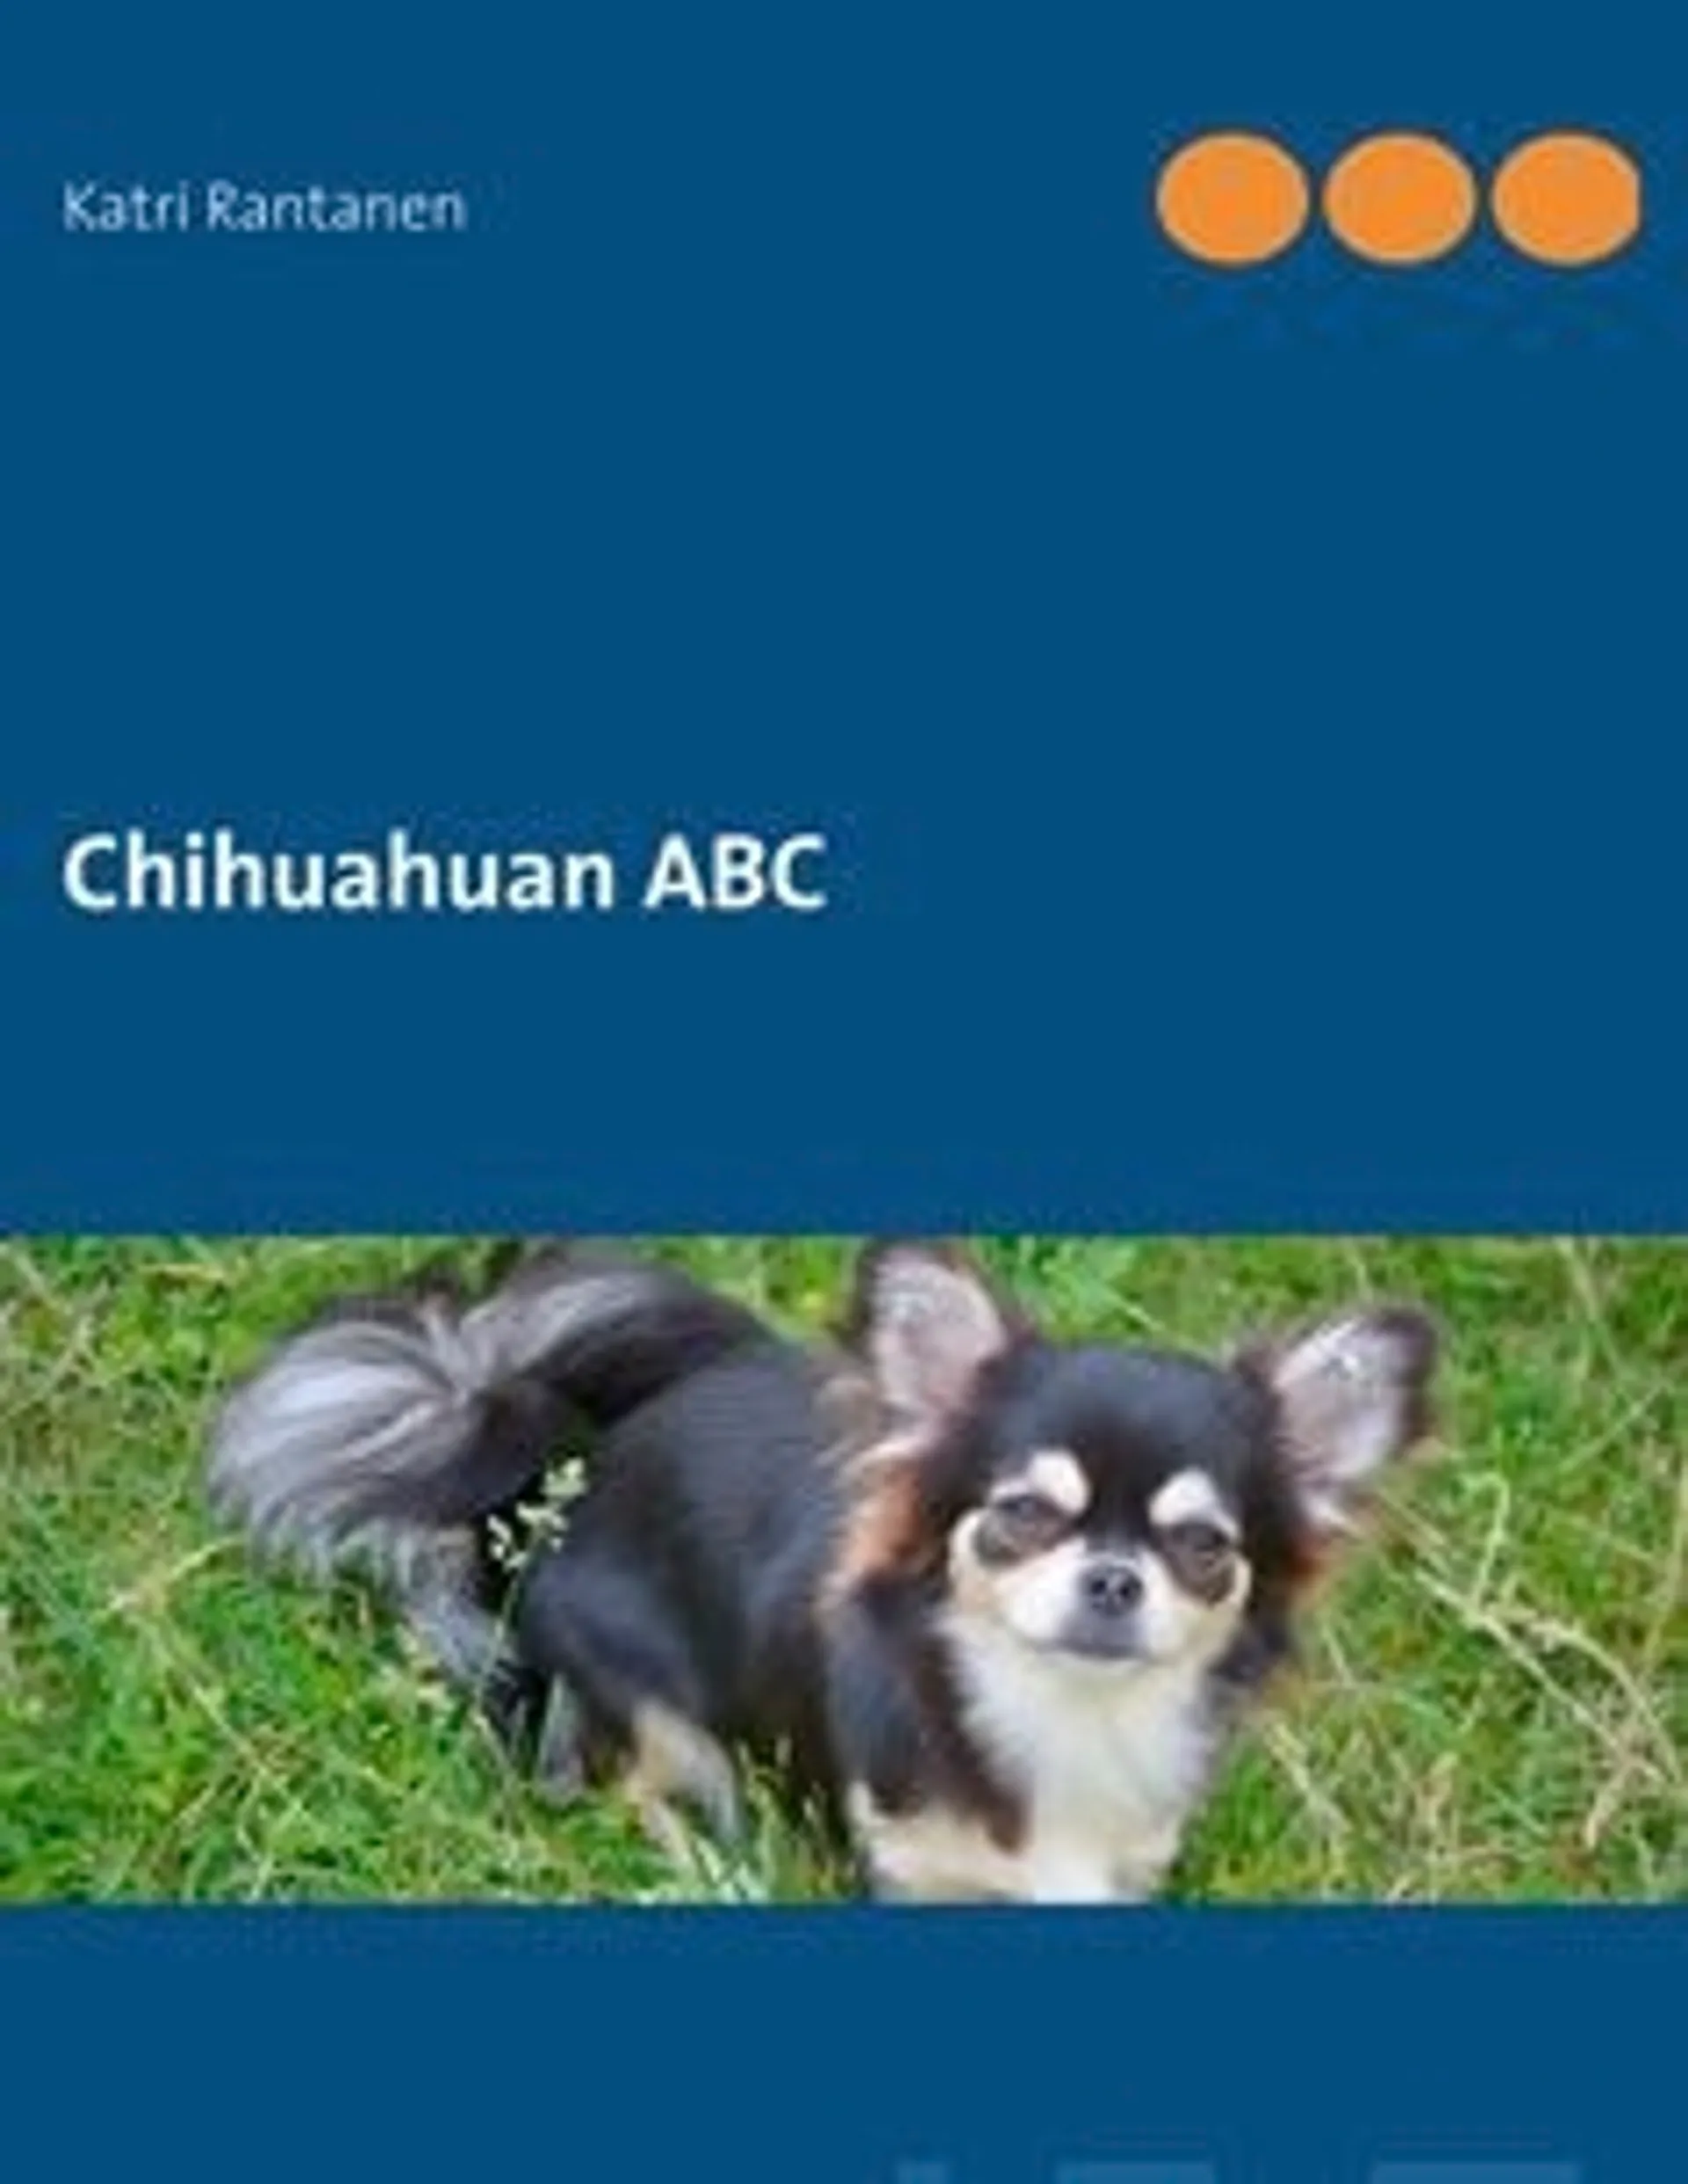 Rantanen, Chihuahuan ABC